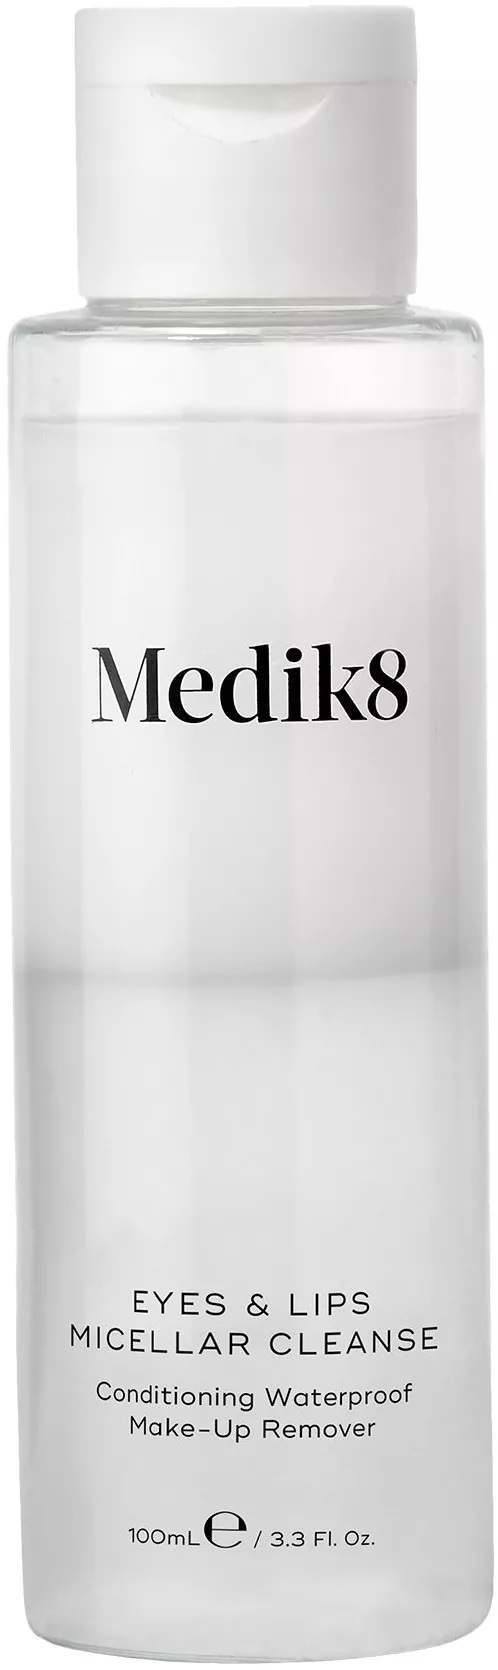 Medik8 Micellás sminklemosó Eyes & Lips Micellar Cleanse (Conditioning Waterproof Make-up Remover) 100 ml